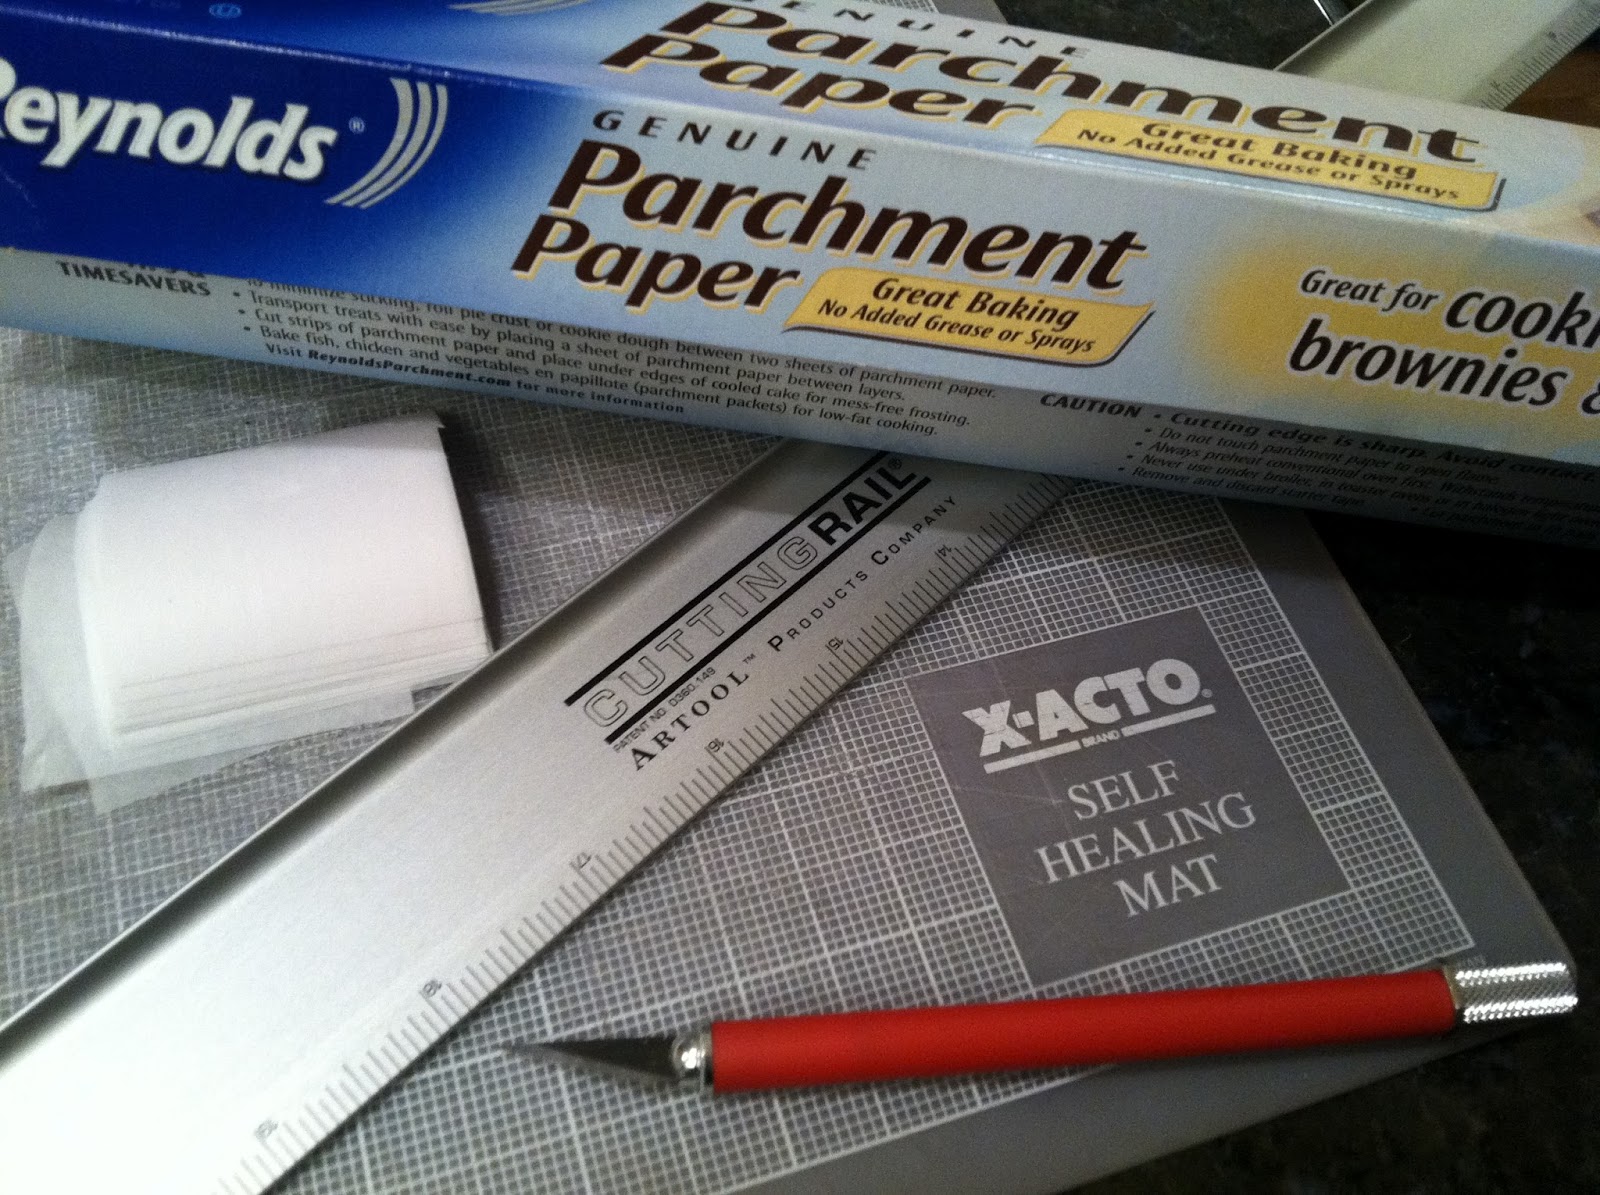 Parchment paper 11x17 100 sheets for baking